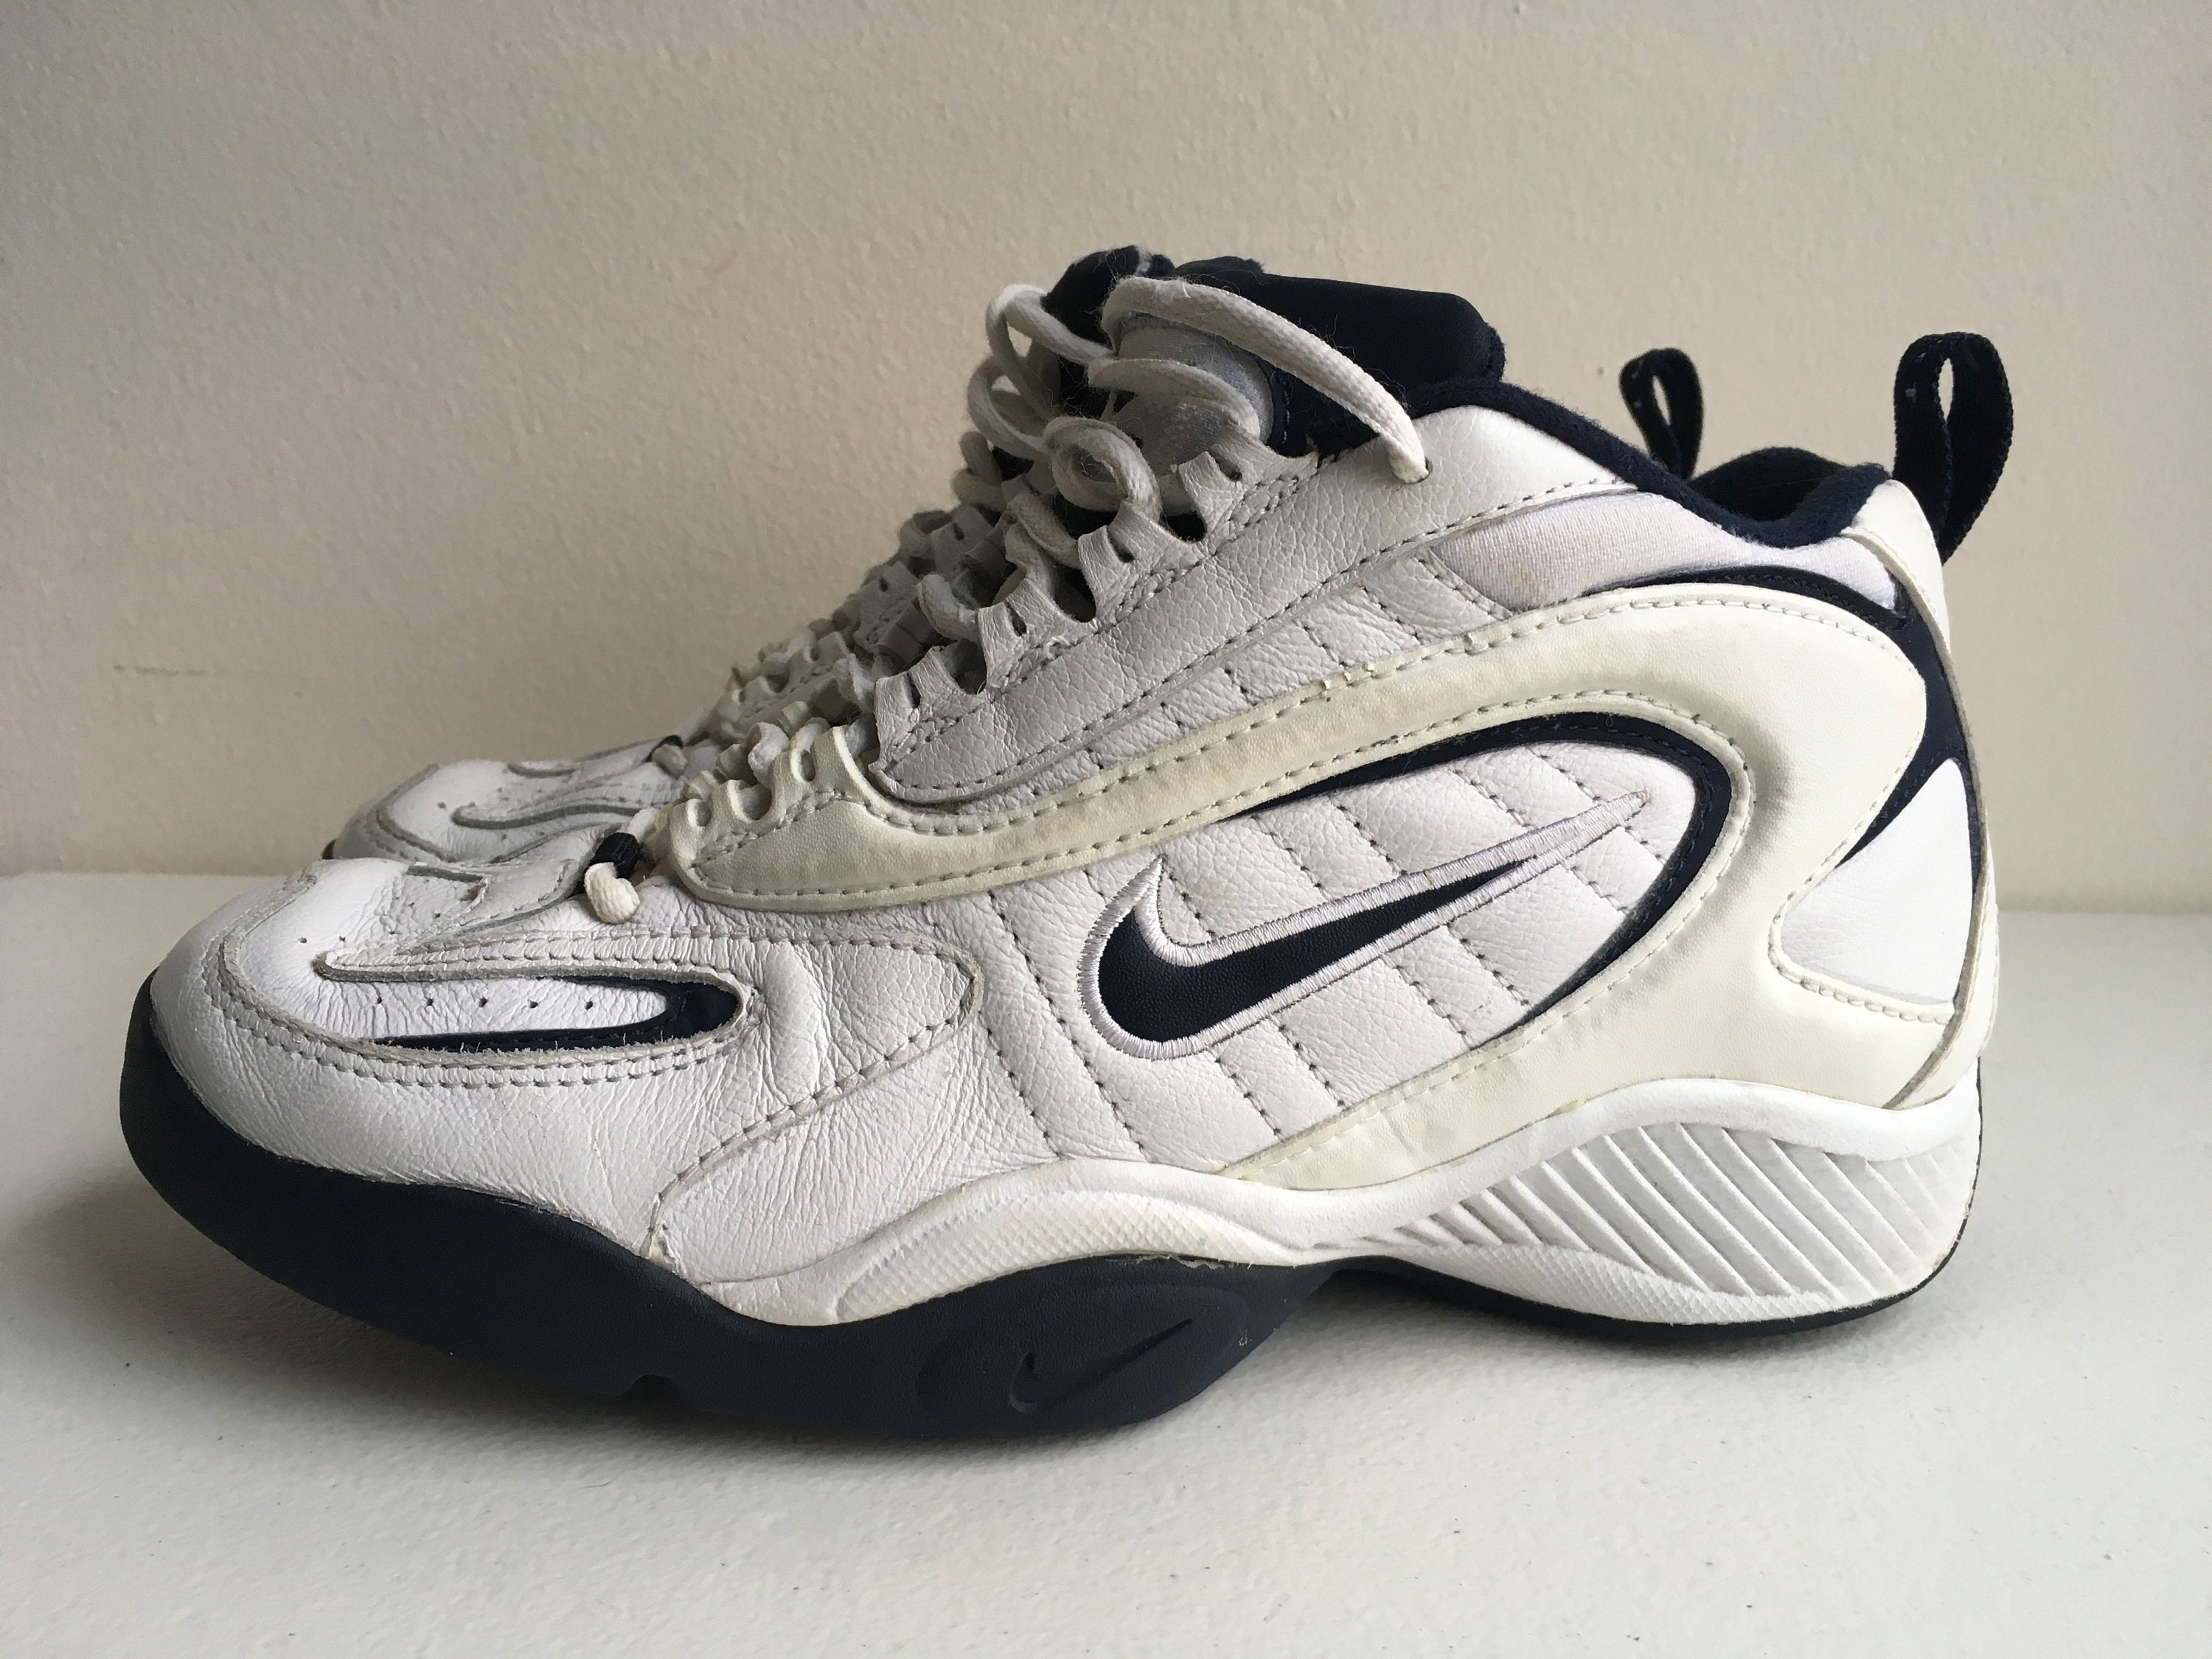 Nike Flight Shoes 1998 and Blue Size 8.5 - Etsy